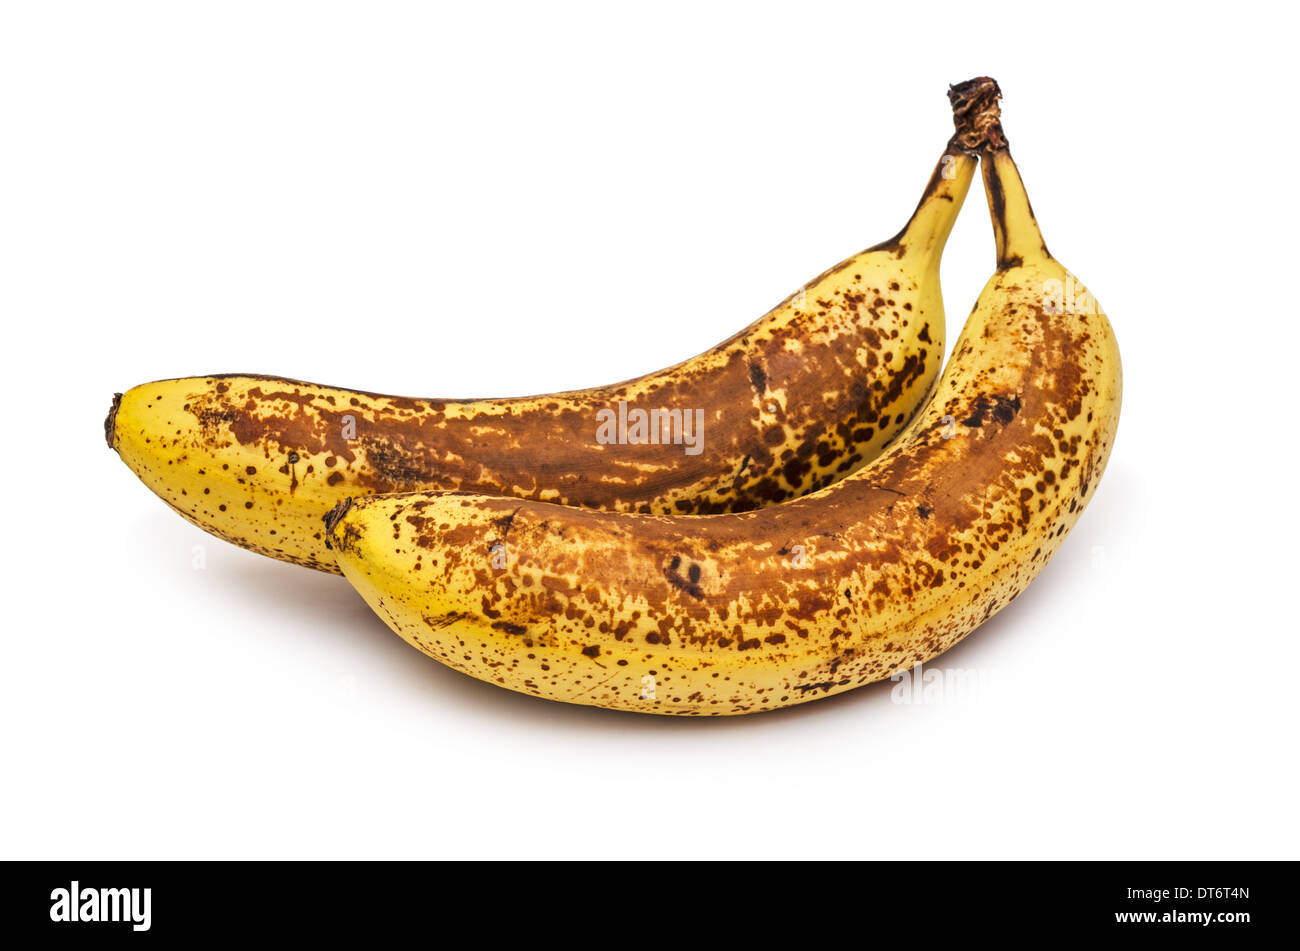 Overripe two bananas. Banana expired. Isolated on white background. Stock Photo